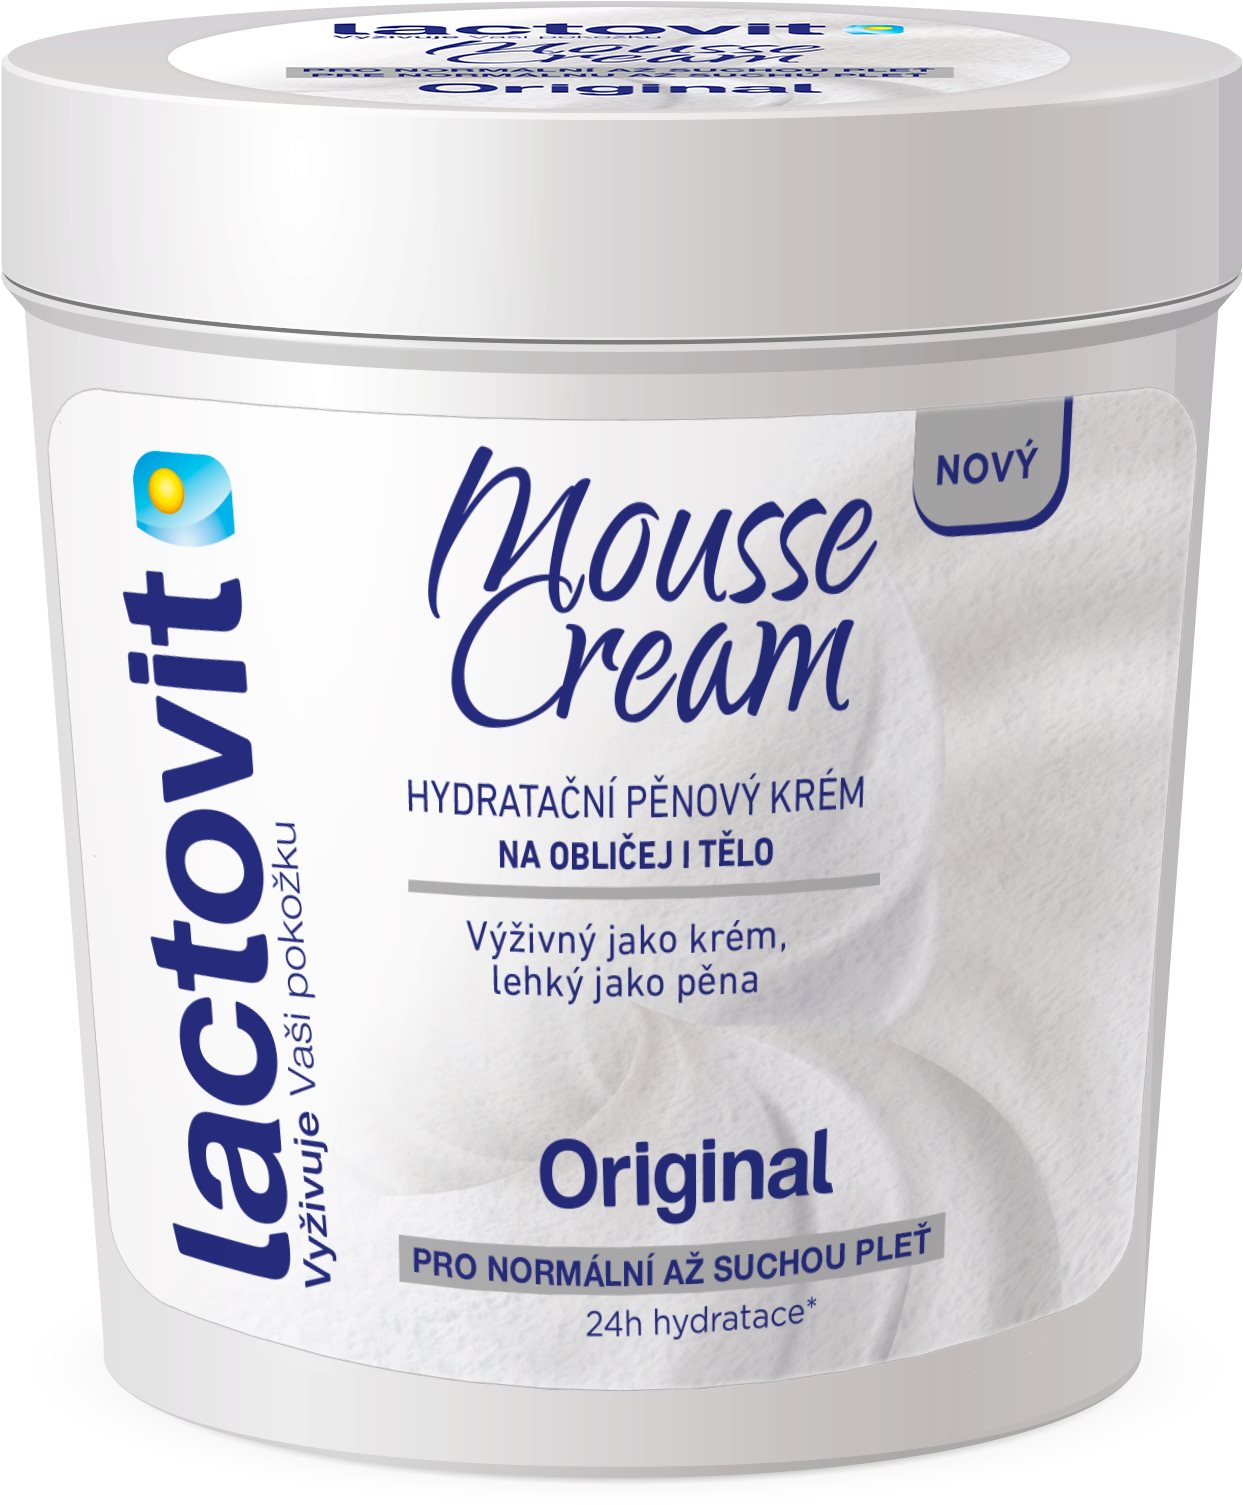 LACTOVIT Orginal Mousse Cream 250 ml